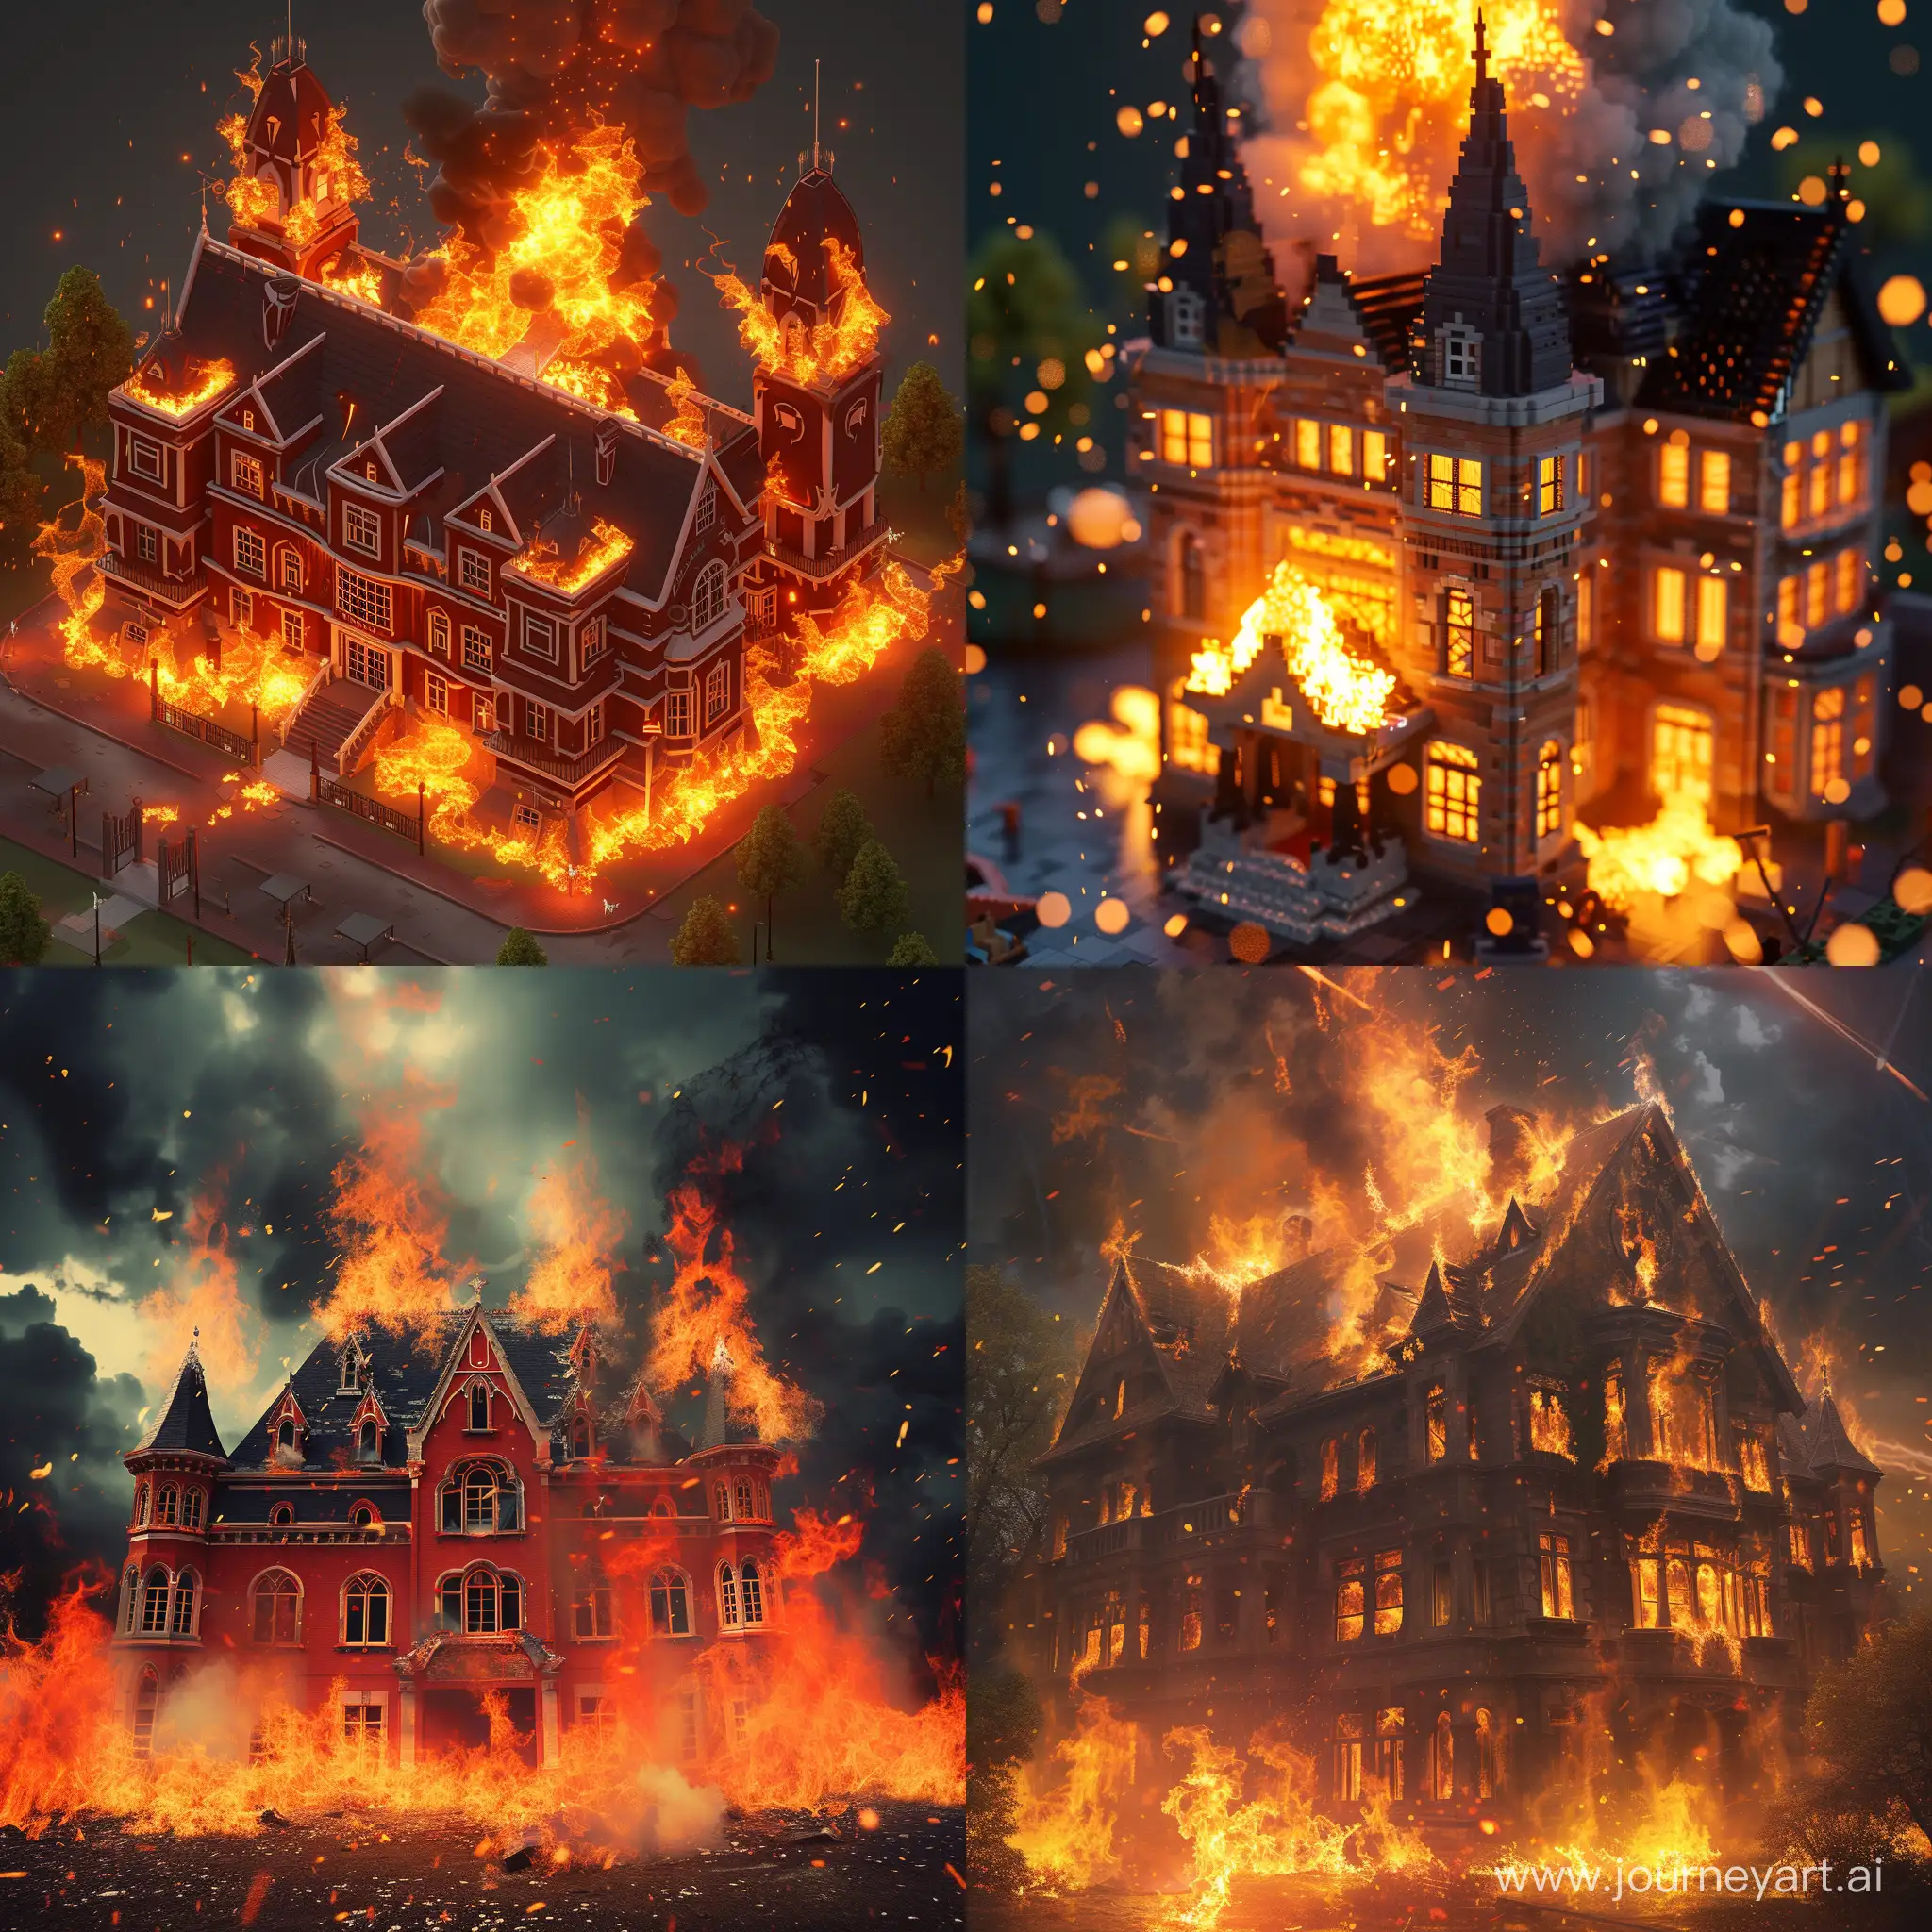 Fantasy-School-with-Fiery-Elements